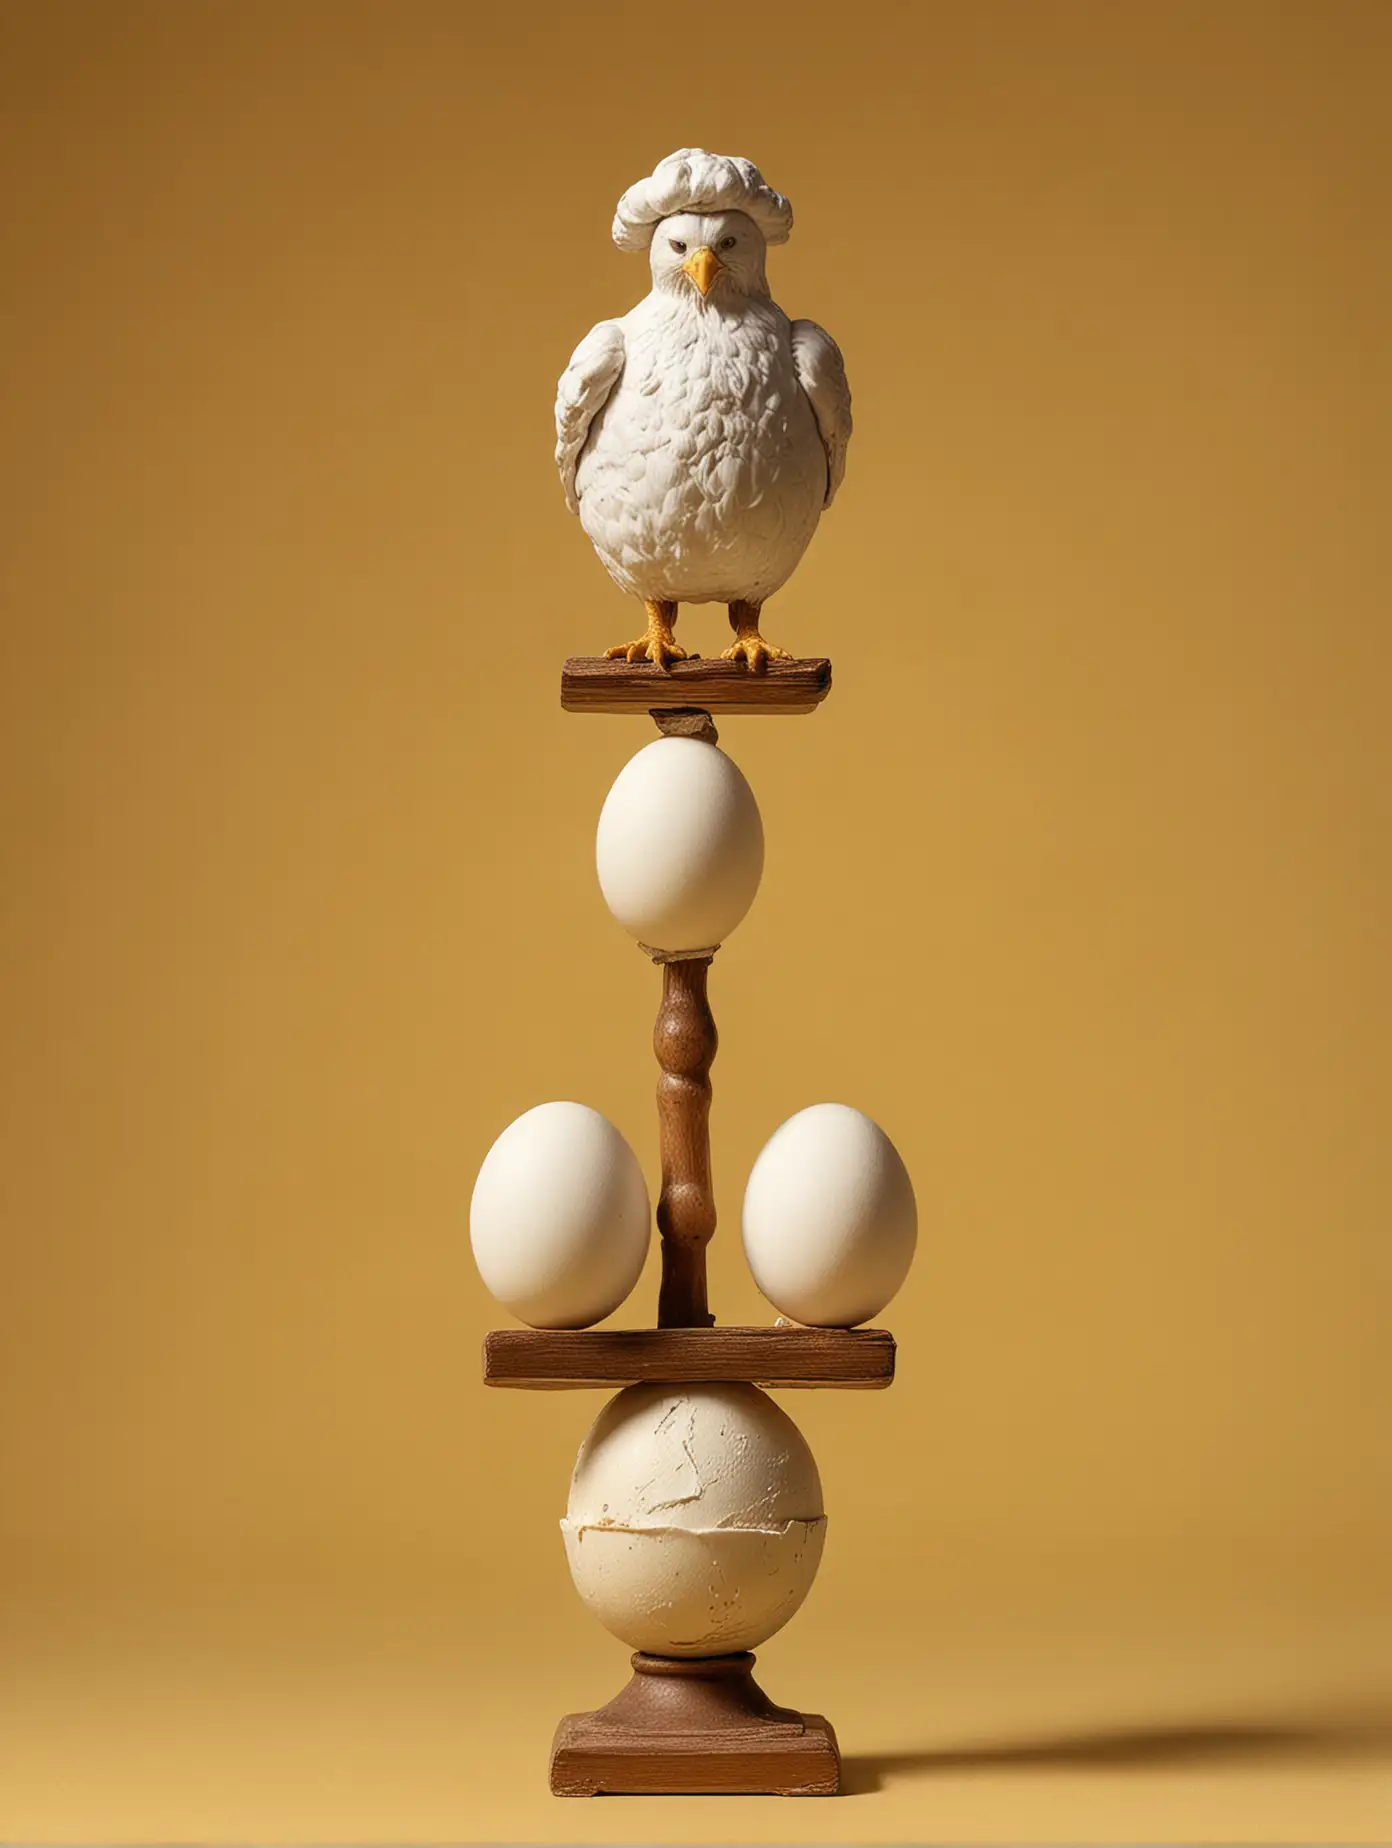 Egg Balancing Art Raffaello Sanzio Inspired